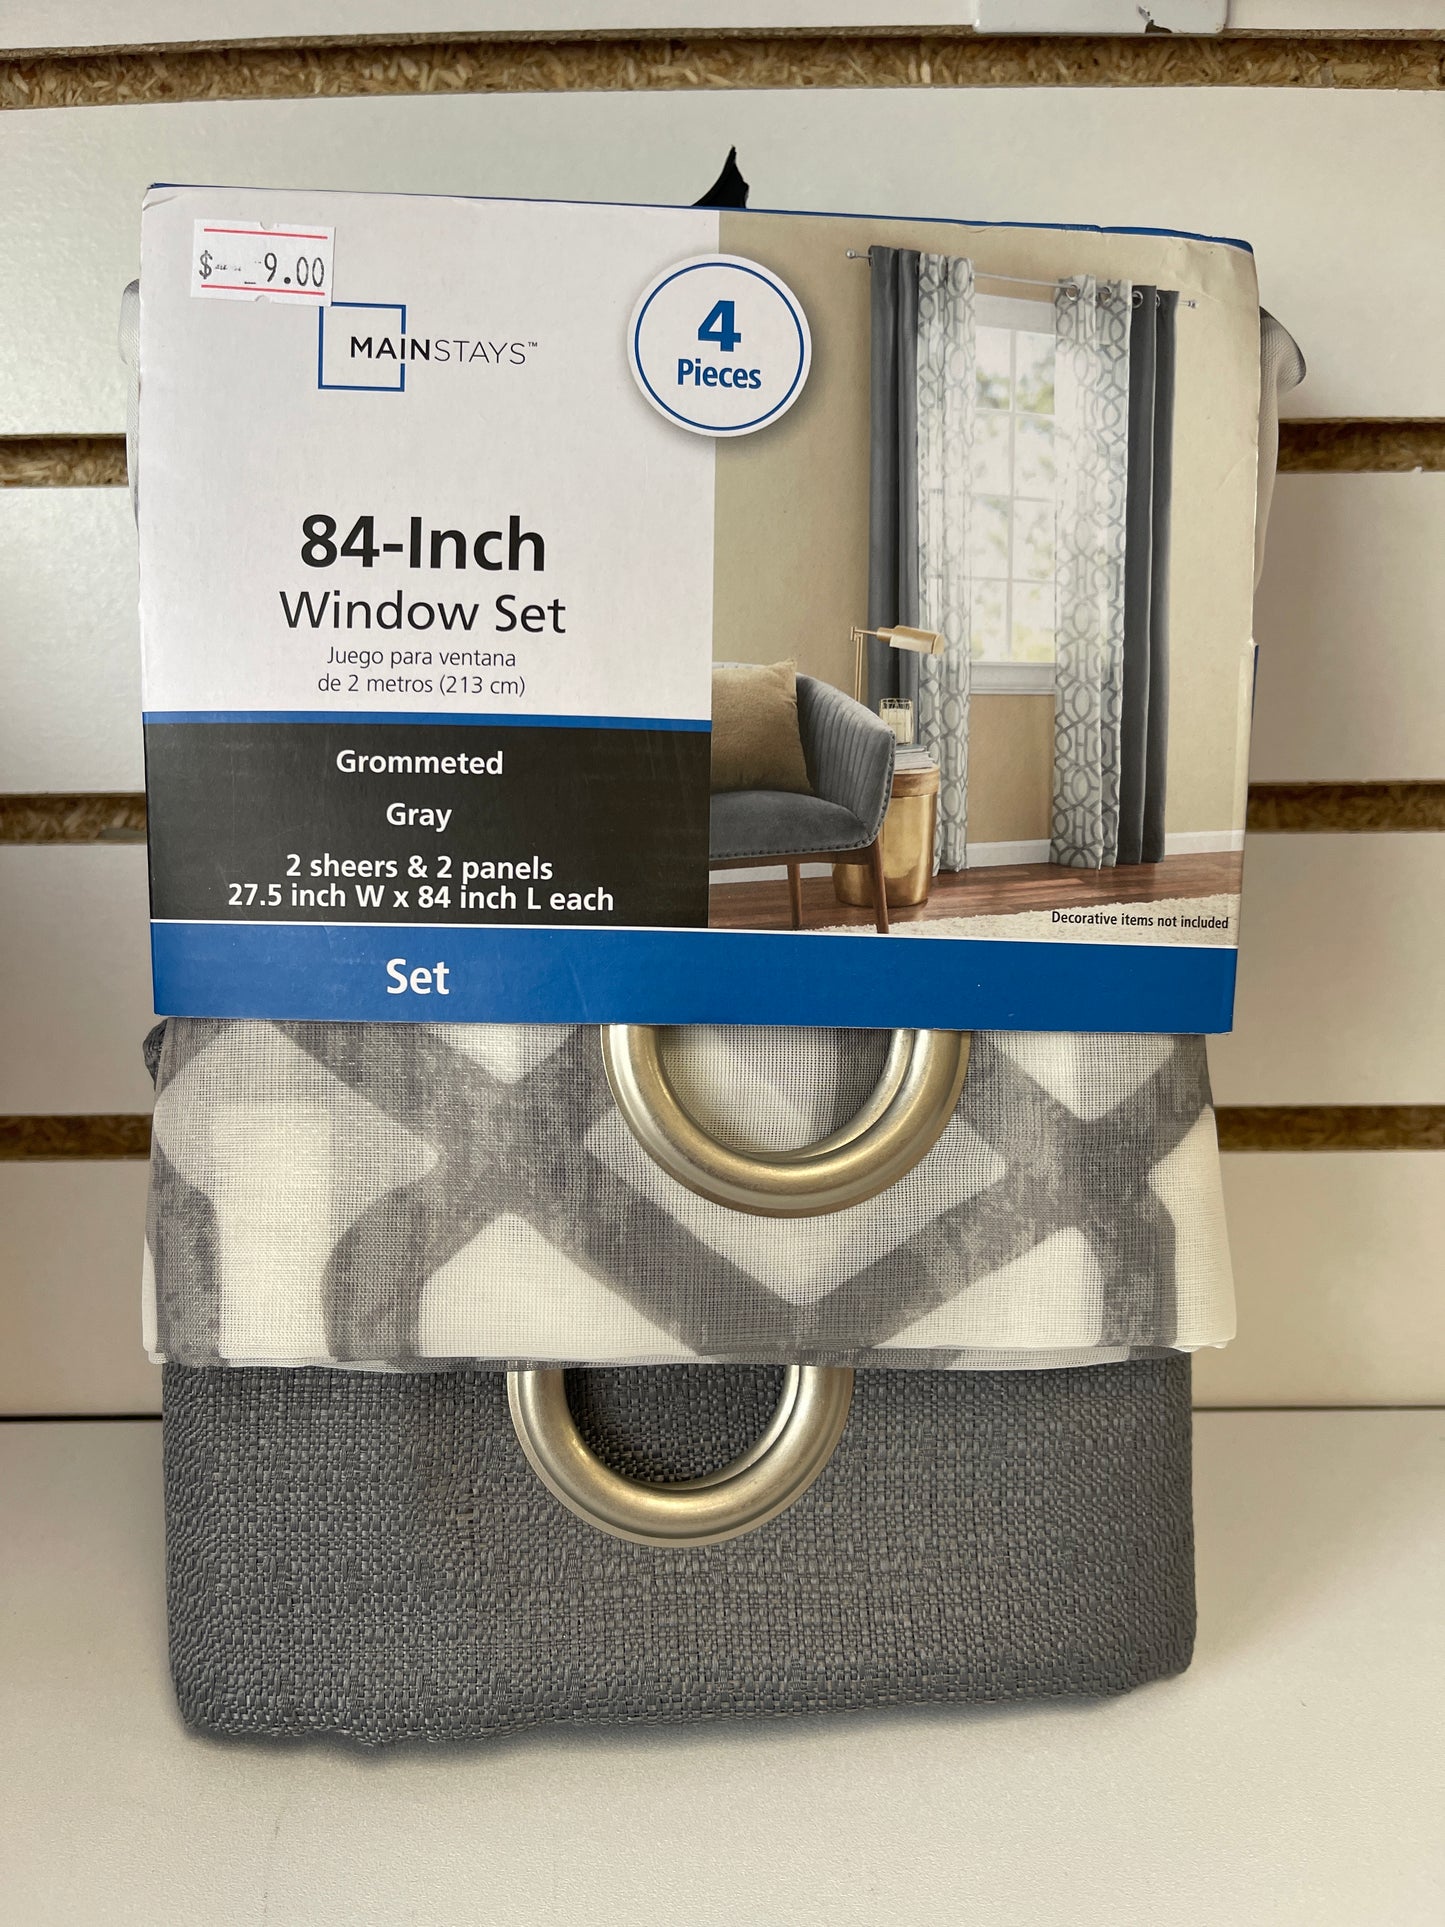 Mainstays Grommeted grey 84” window set fretwork/grey flannel